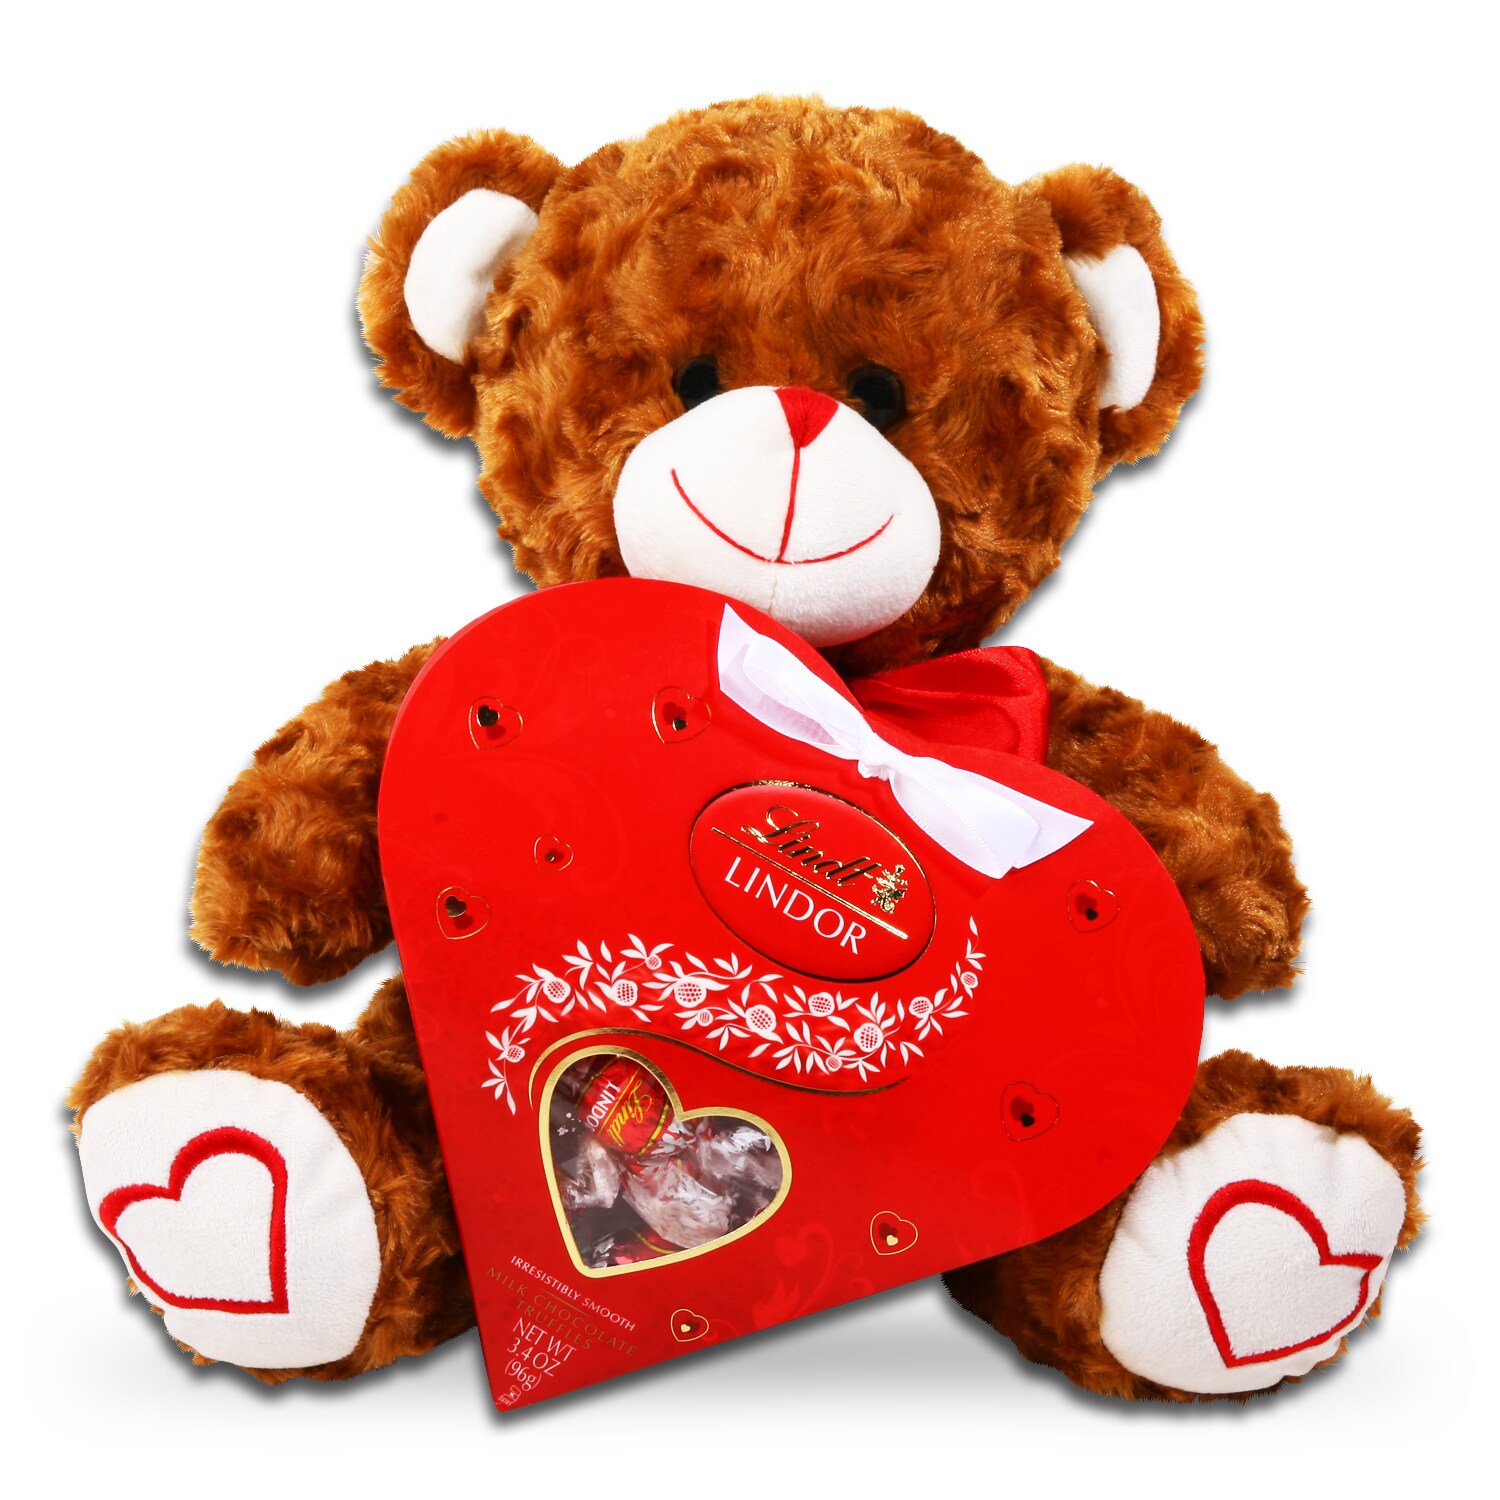 Alder Creek Valentine Bear And Chocolate Heart Gift Box Overstock 9740546